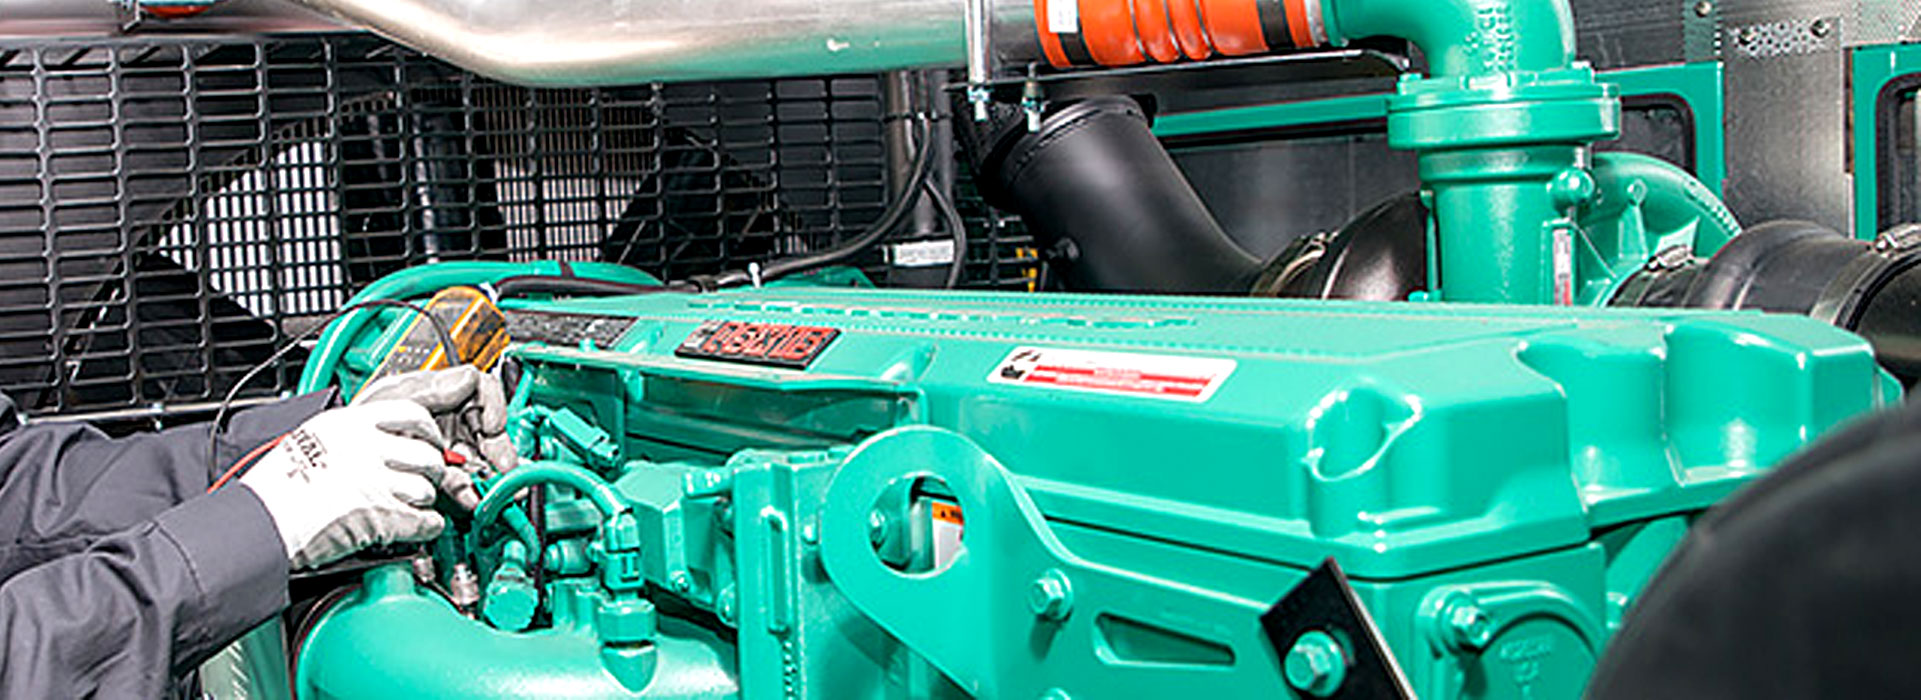 Diesel generator mechanic jobs in dubai